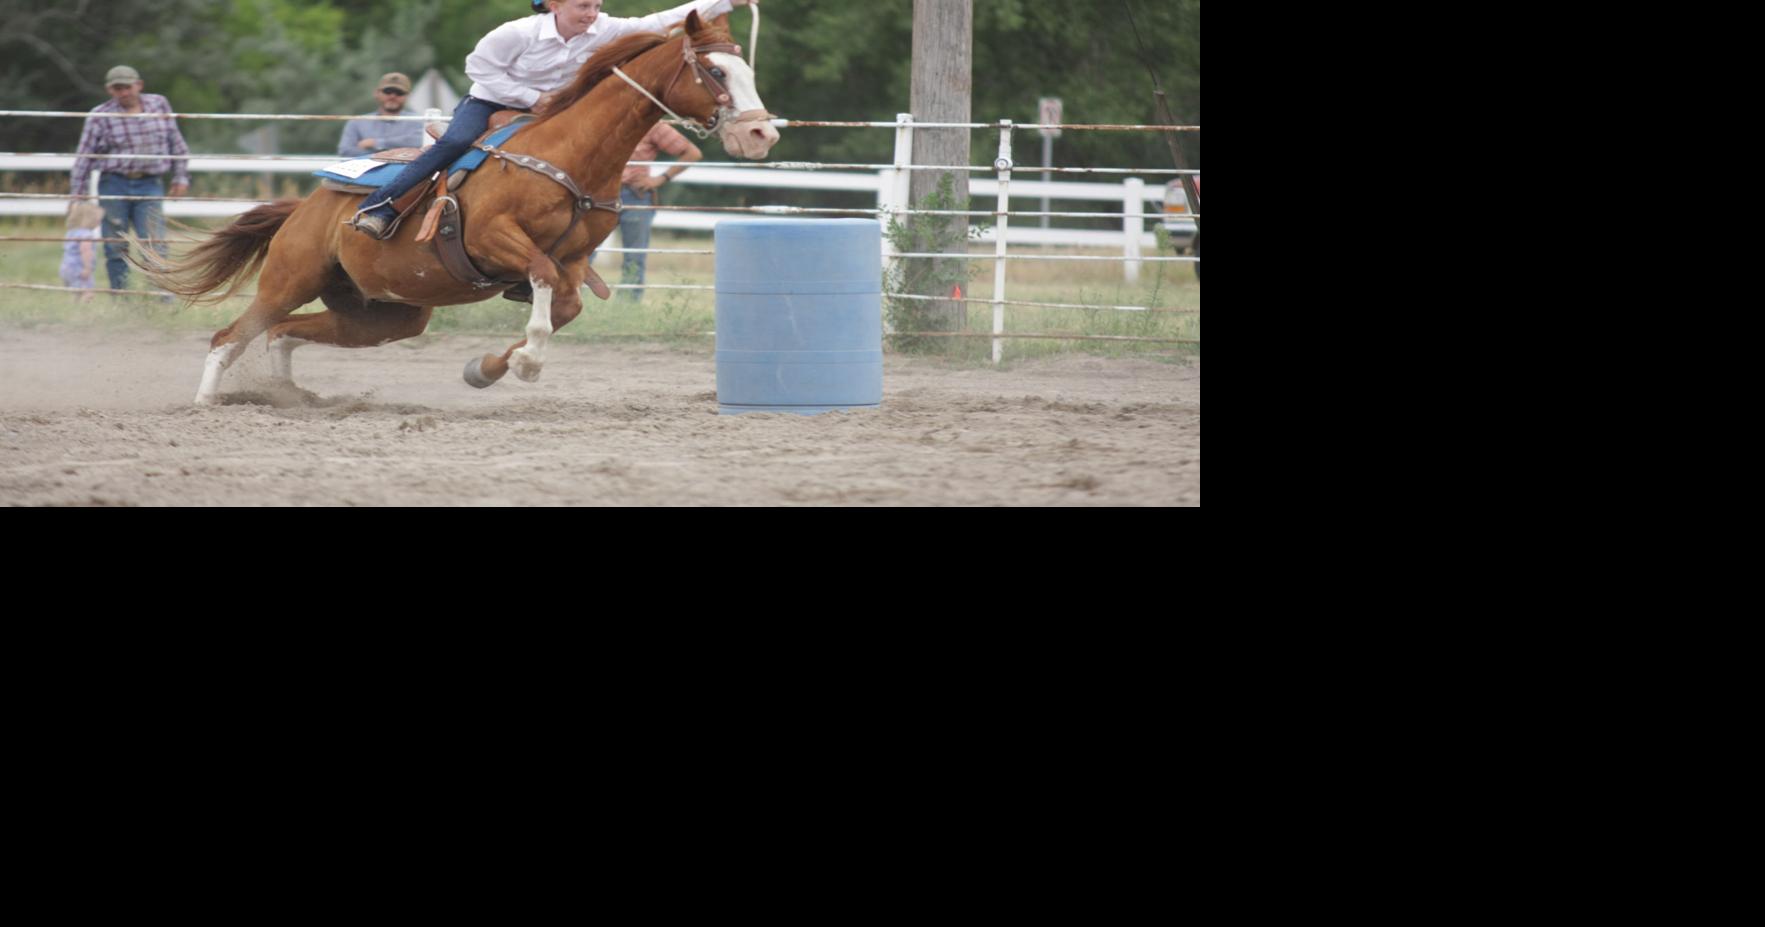 PHOTOS Scotts Bluff County Fair horse show